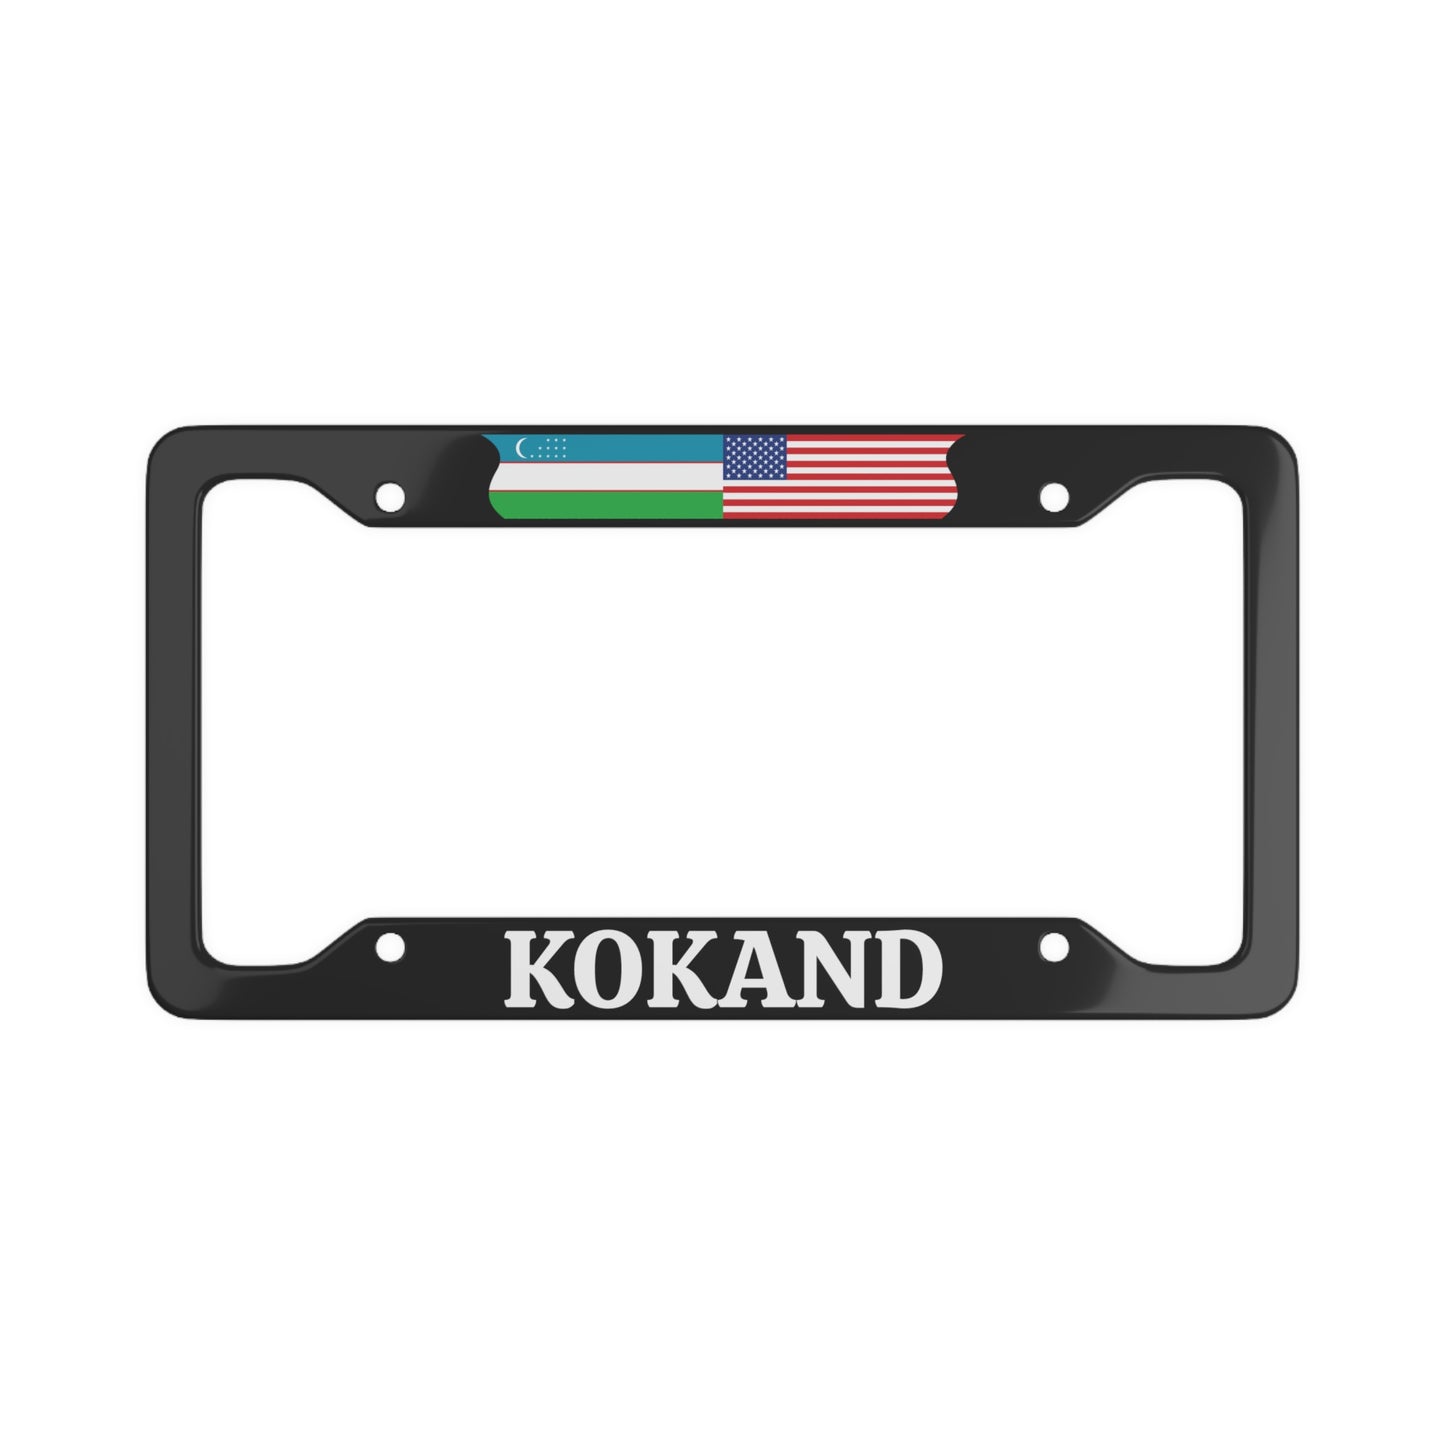 KOKAND Uzbekistan with flag License Plate Frame